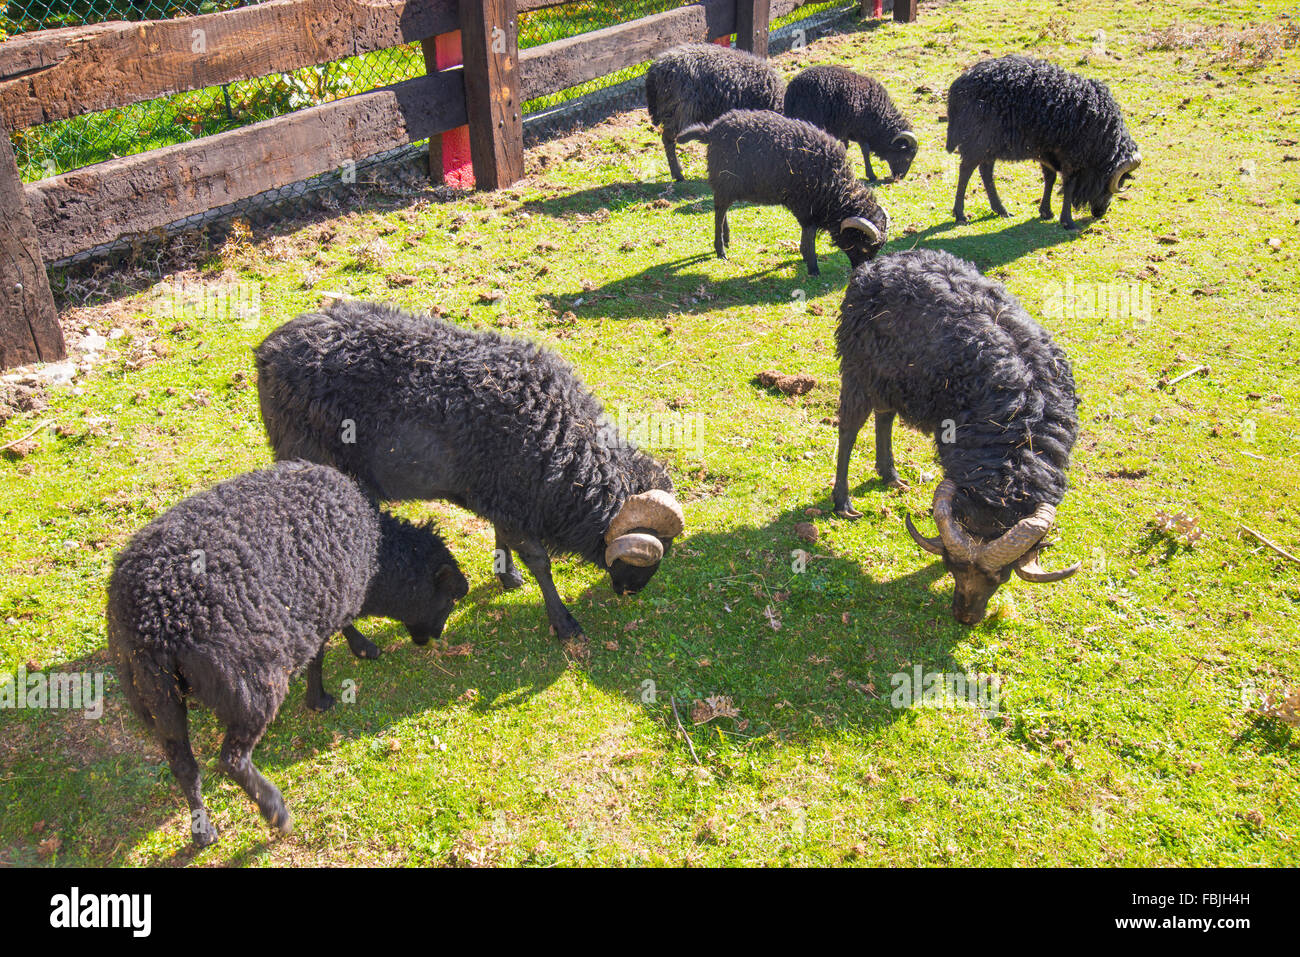 Black sheep grazing in a farm. Stock Photo